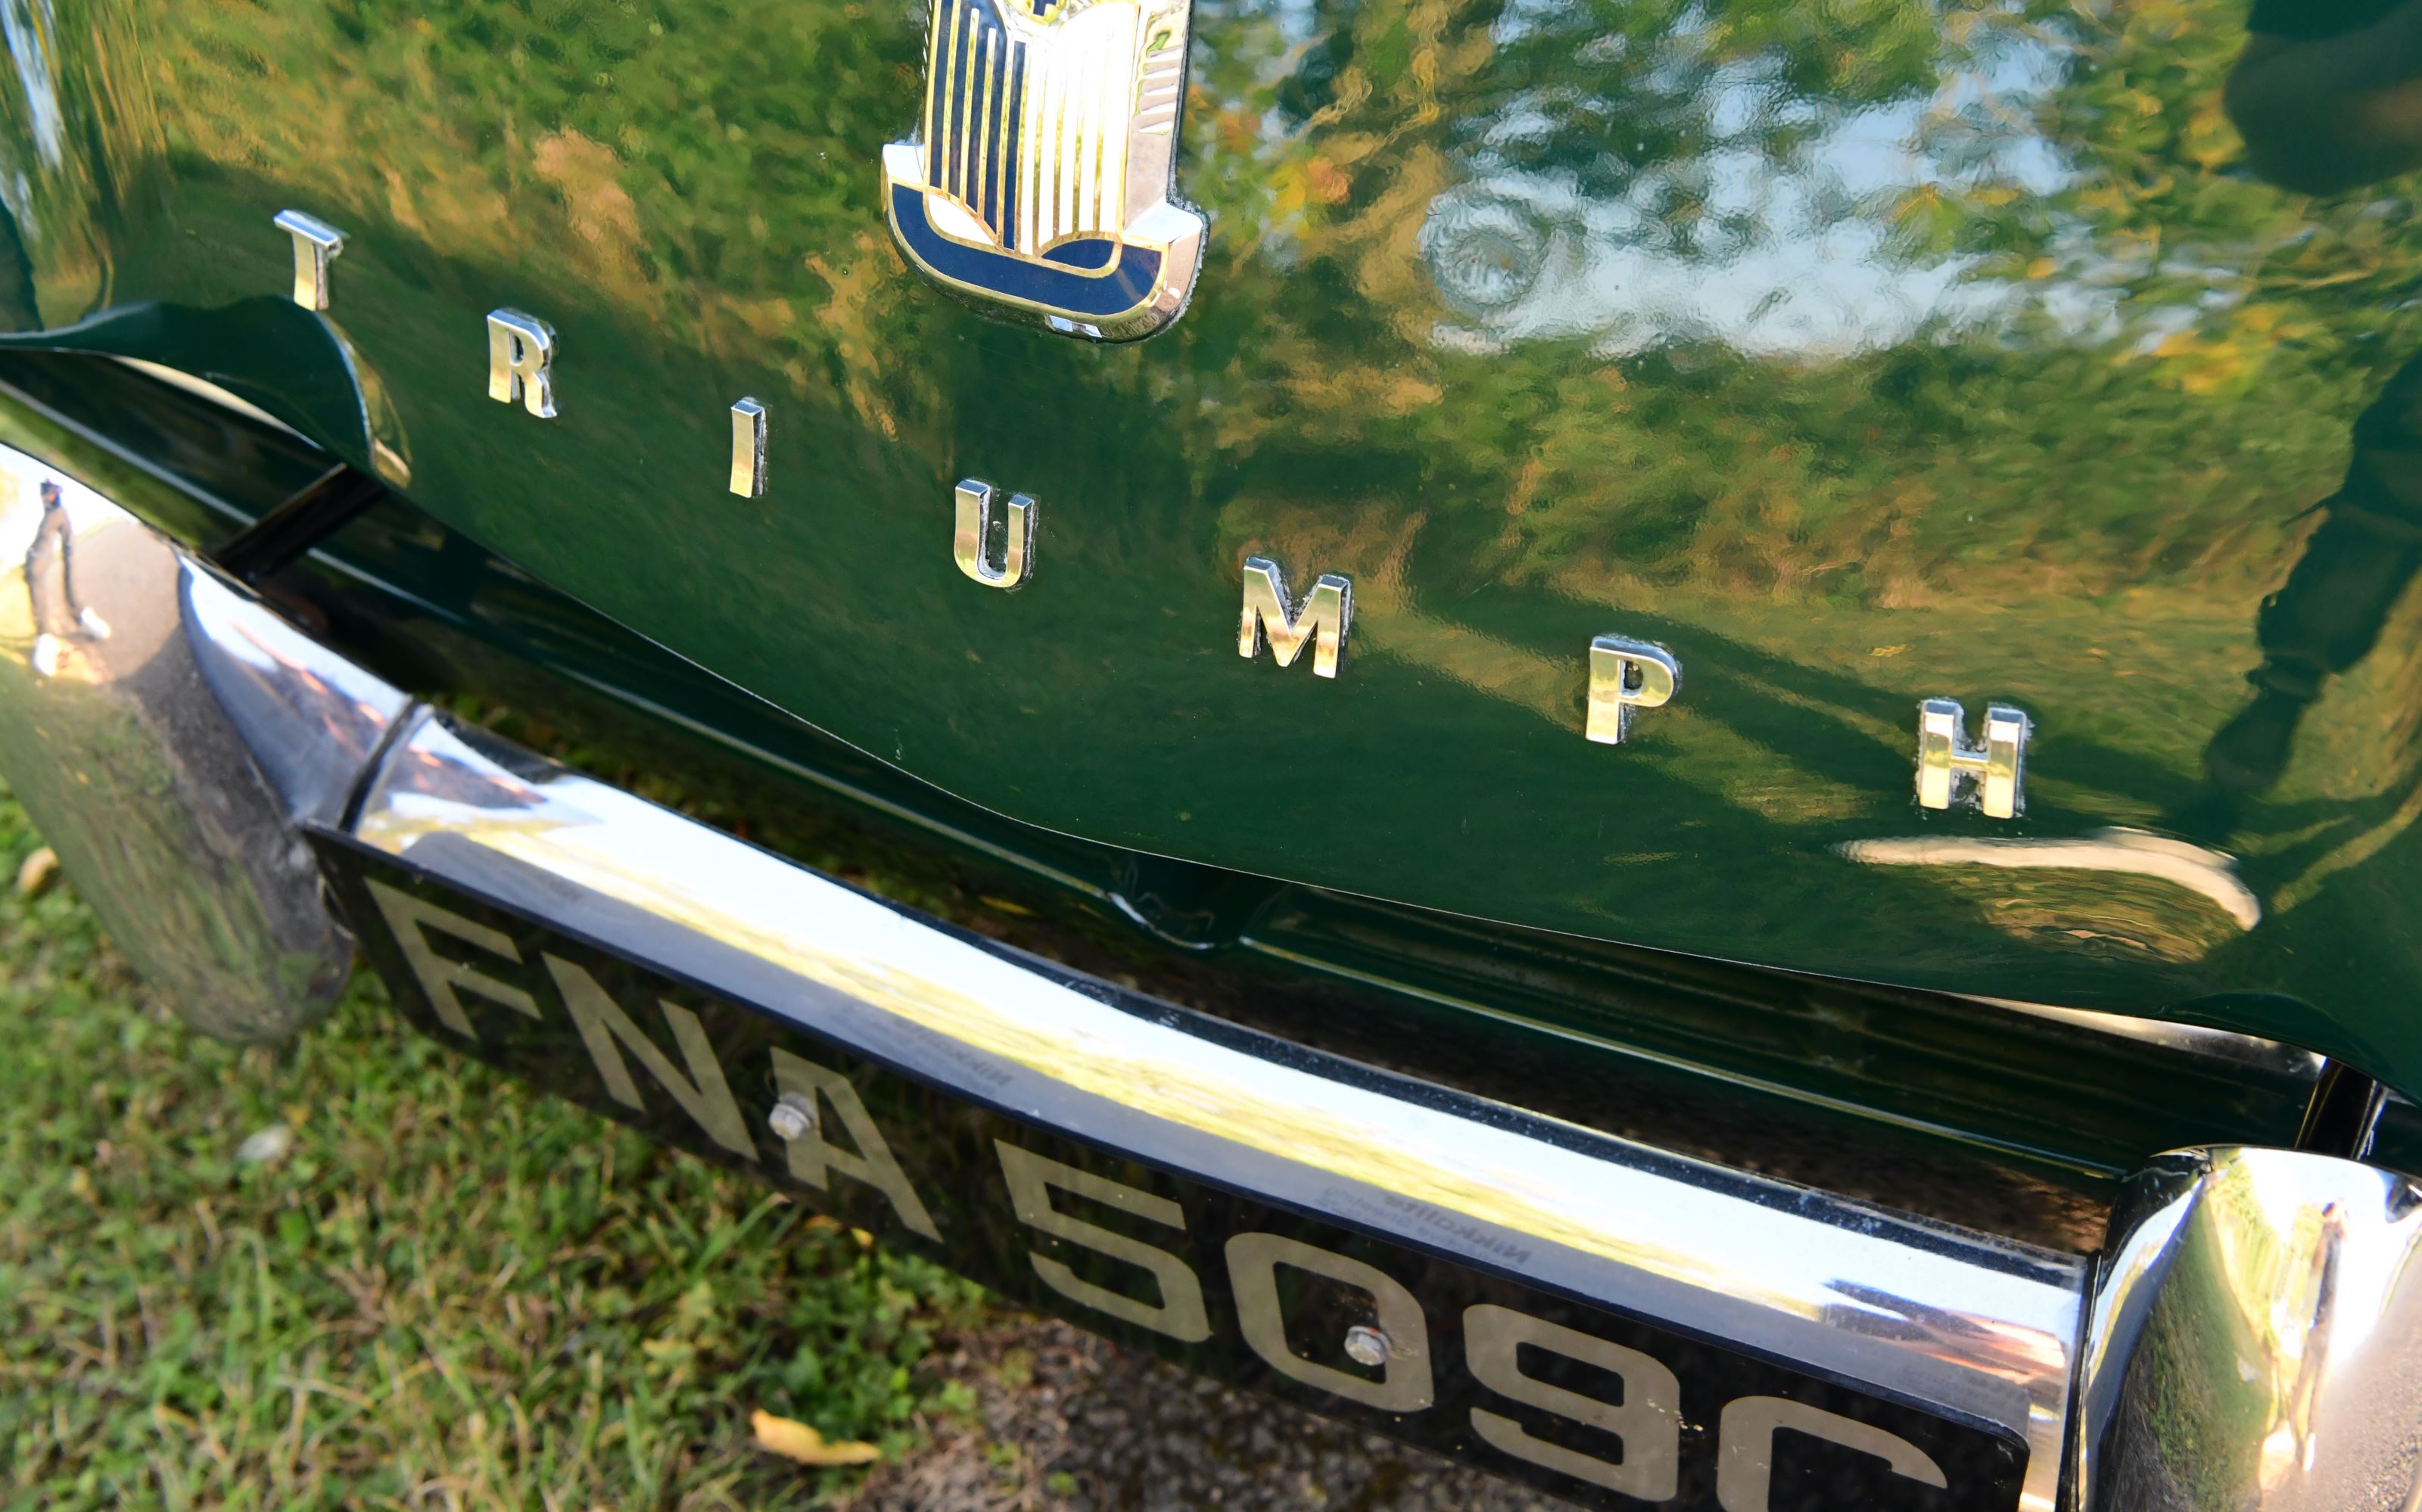 Triumph tr4 d7nriylsv4o7erz99g0dp